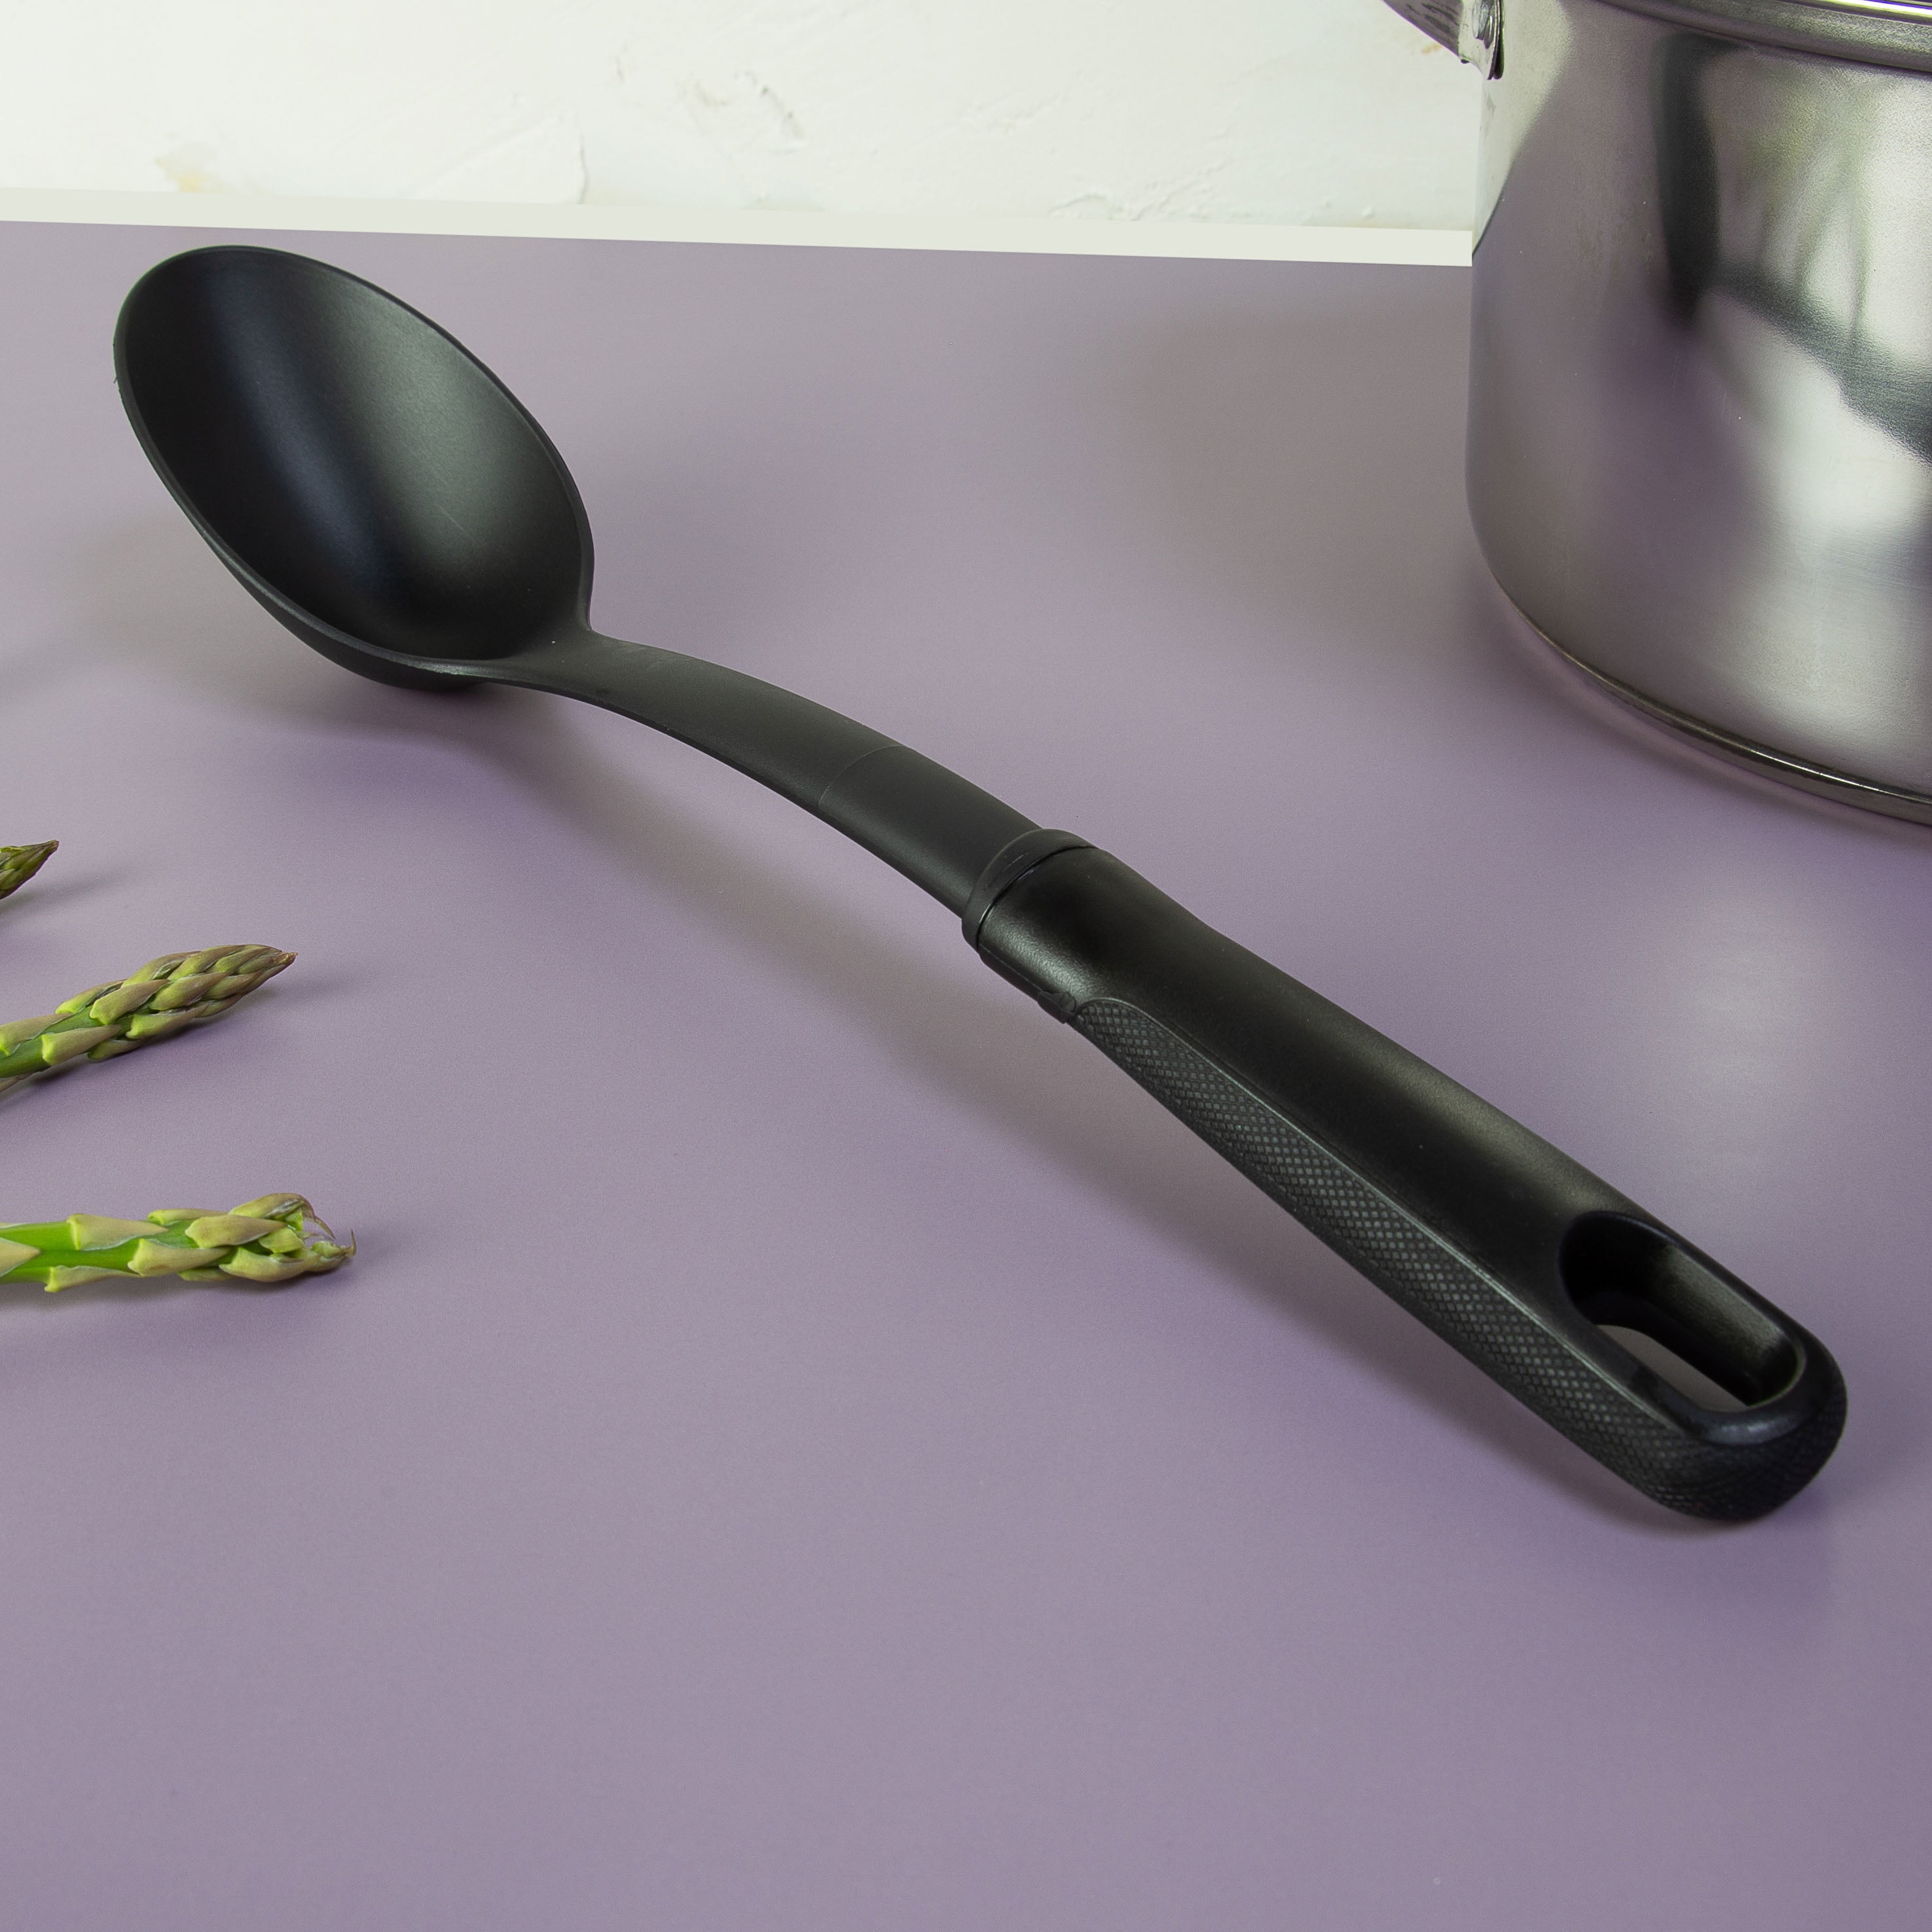  KitchenAid KO004OHOBA Gourmet Nylon Slotted Spoon, One Size,  BlackandKitchenAid Classic Basting Spoon, One Size, Black 2: Home & Kitchen